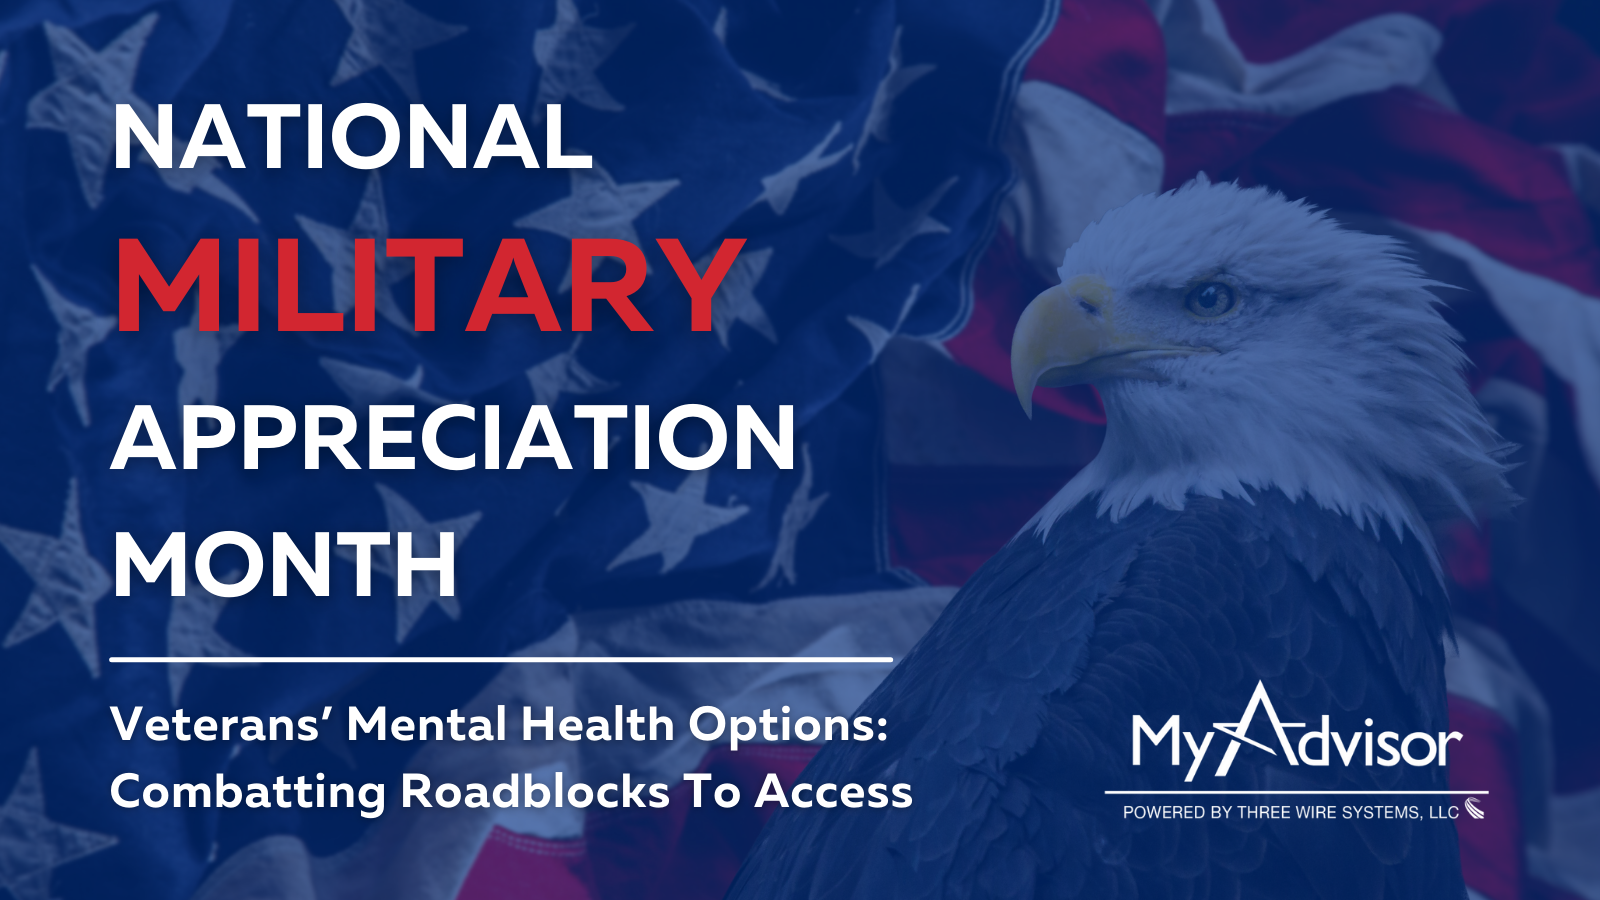 Veterans’ Mental Health Options: Combatting Roadblocks To Access